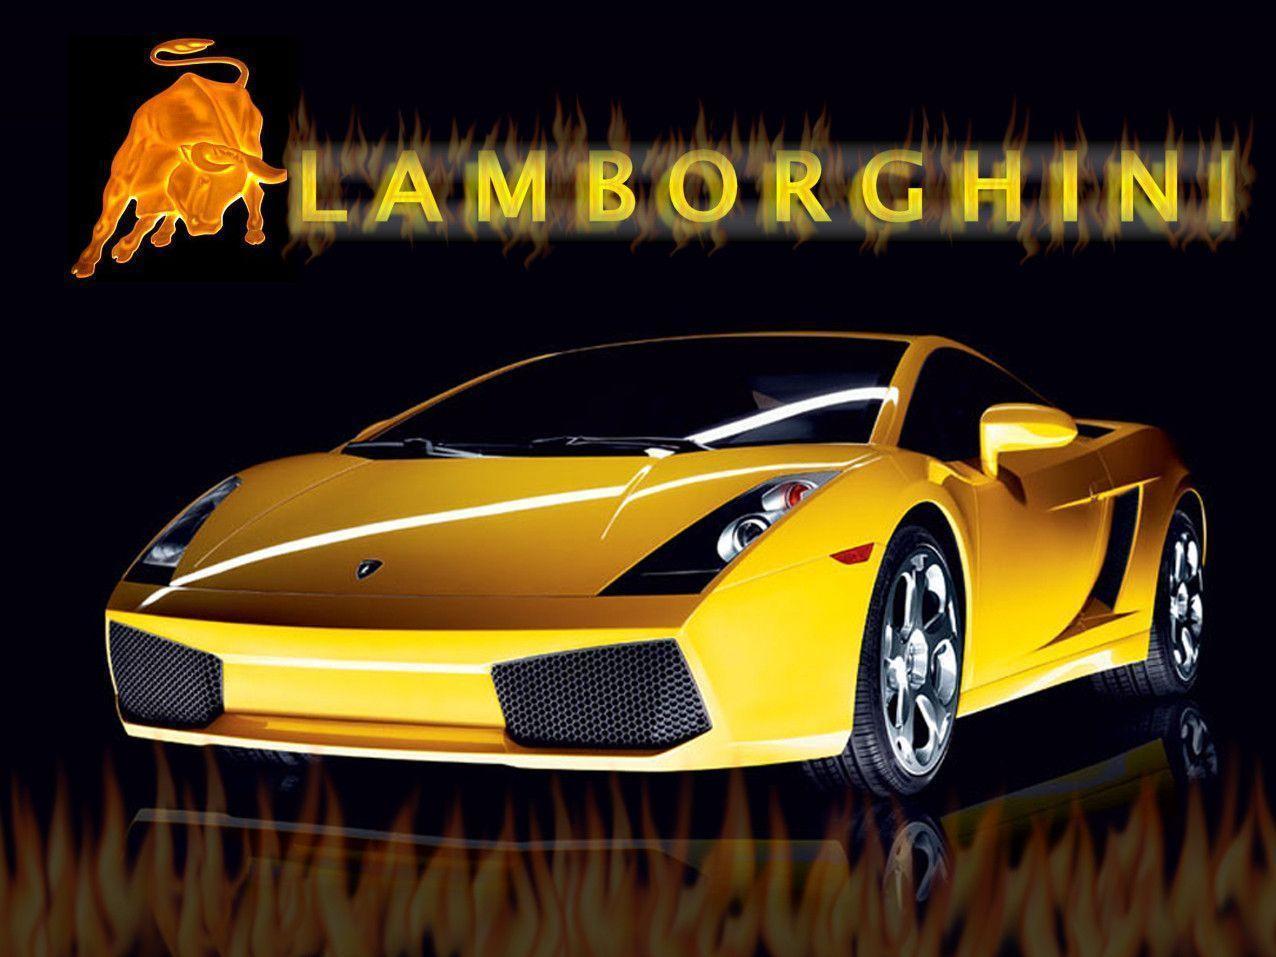 Cool Lamborghini Wallpaper 6249 Wallpaper. hdesktopict